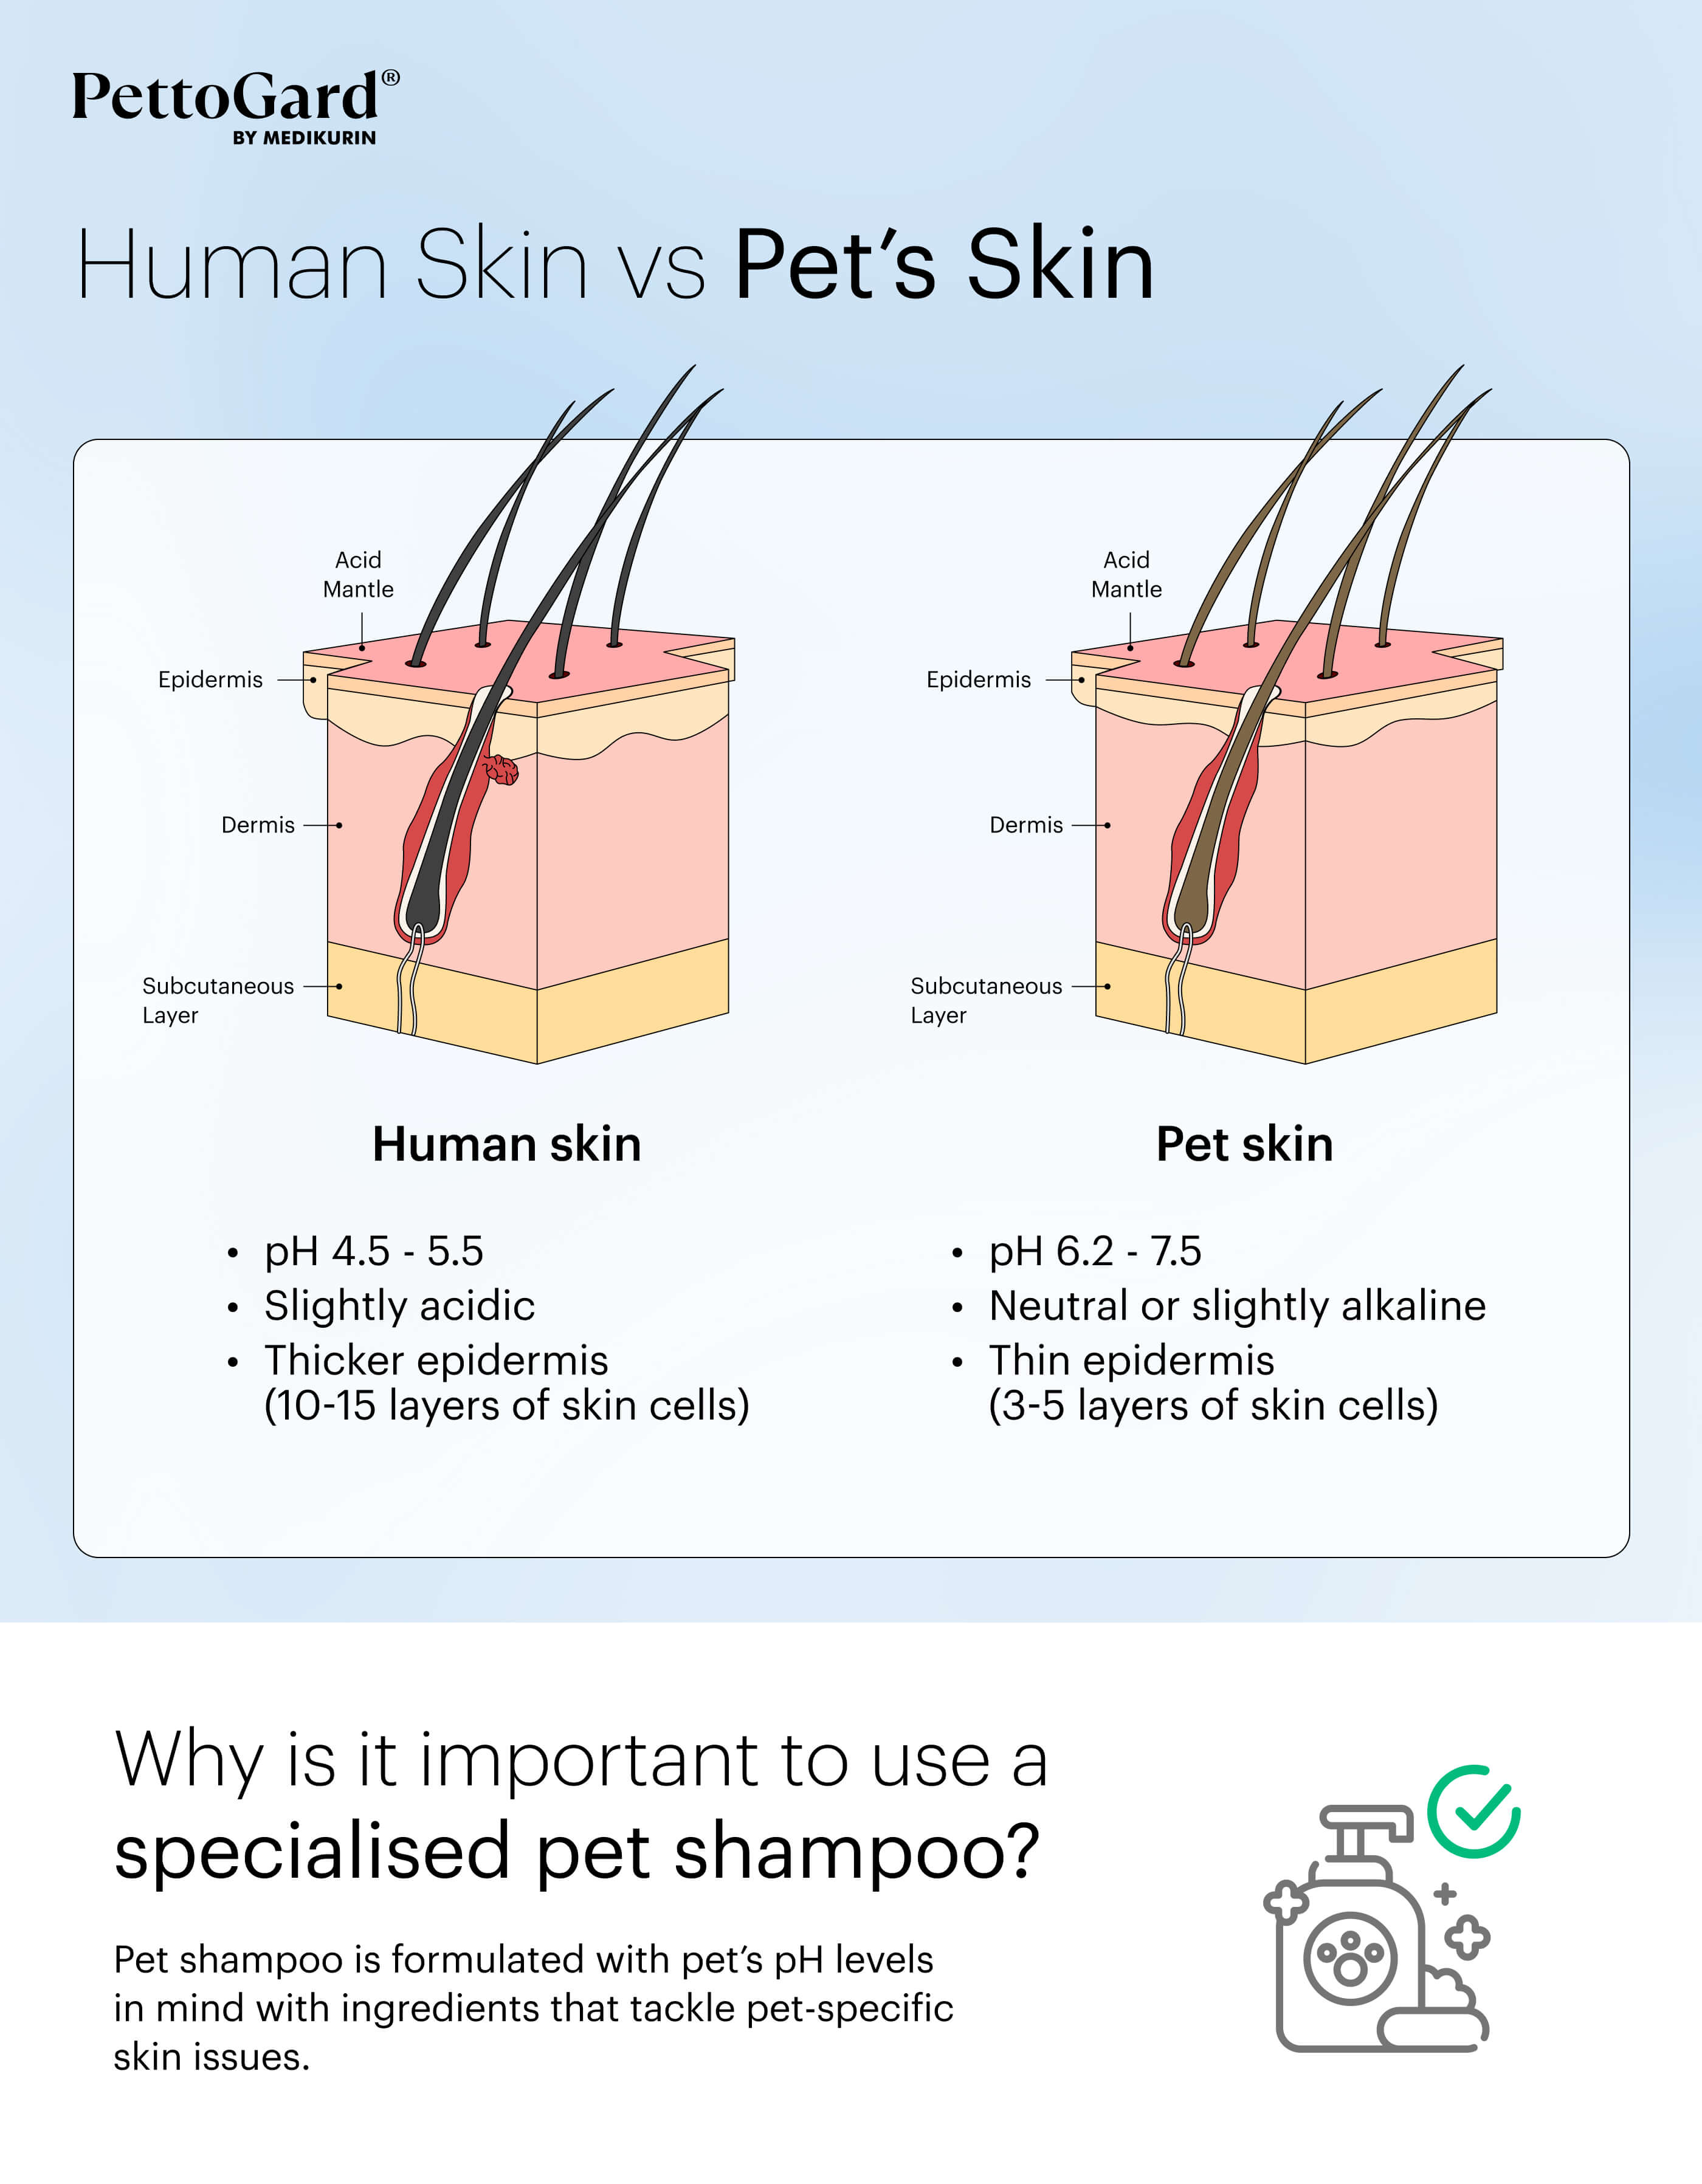 MEDIKURIN PettoGard Pet skin vs Human skin